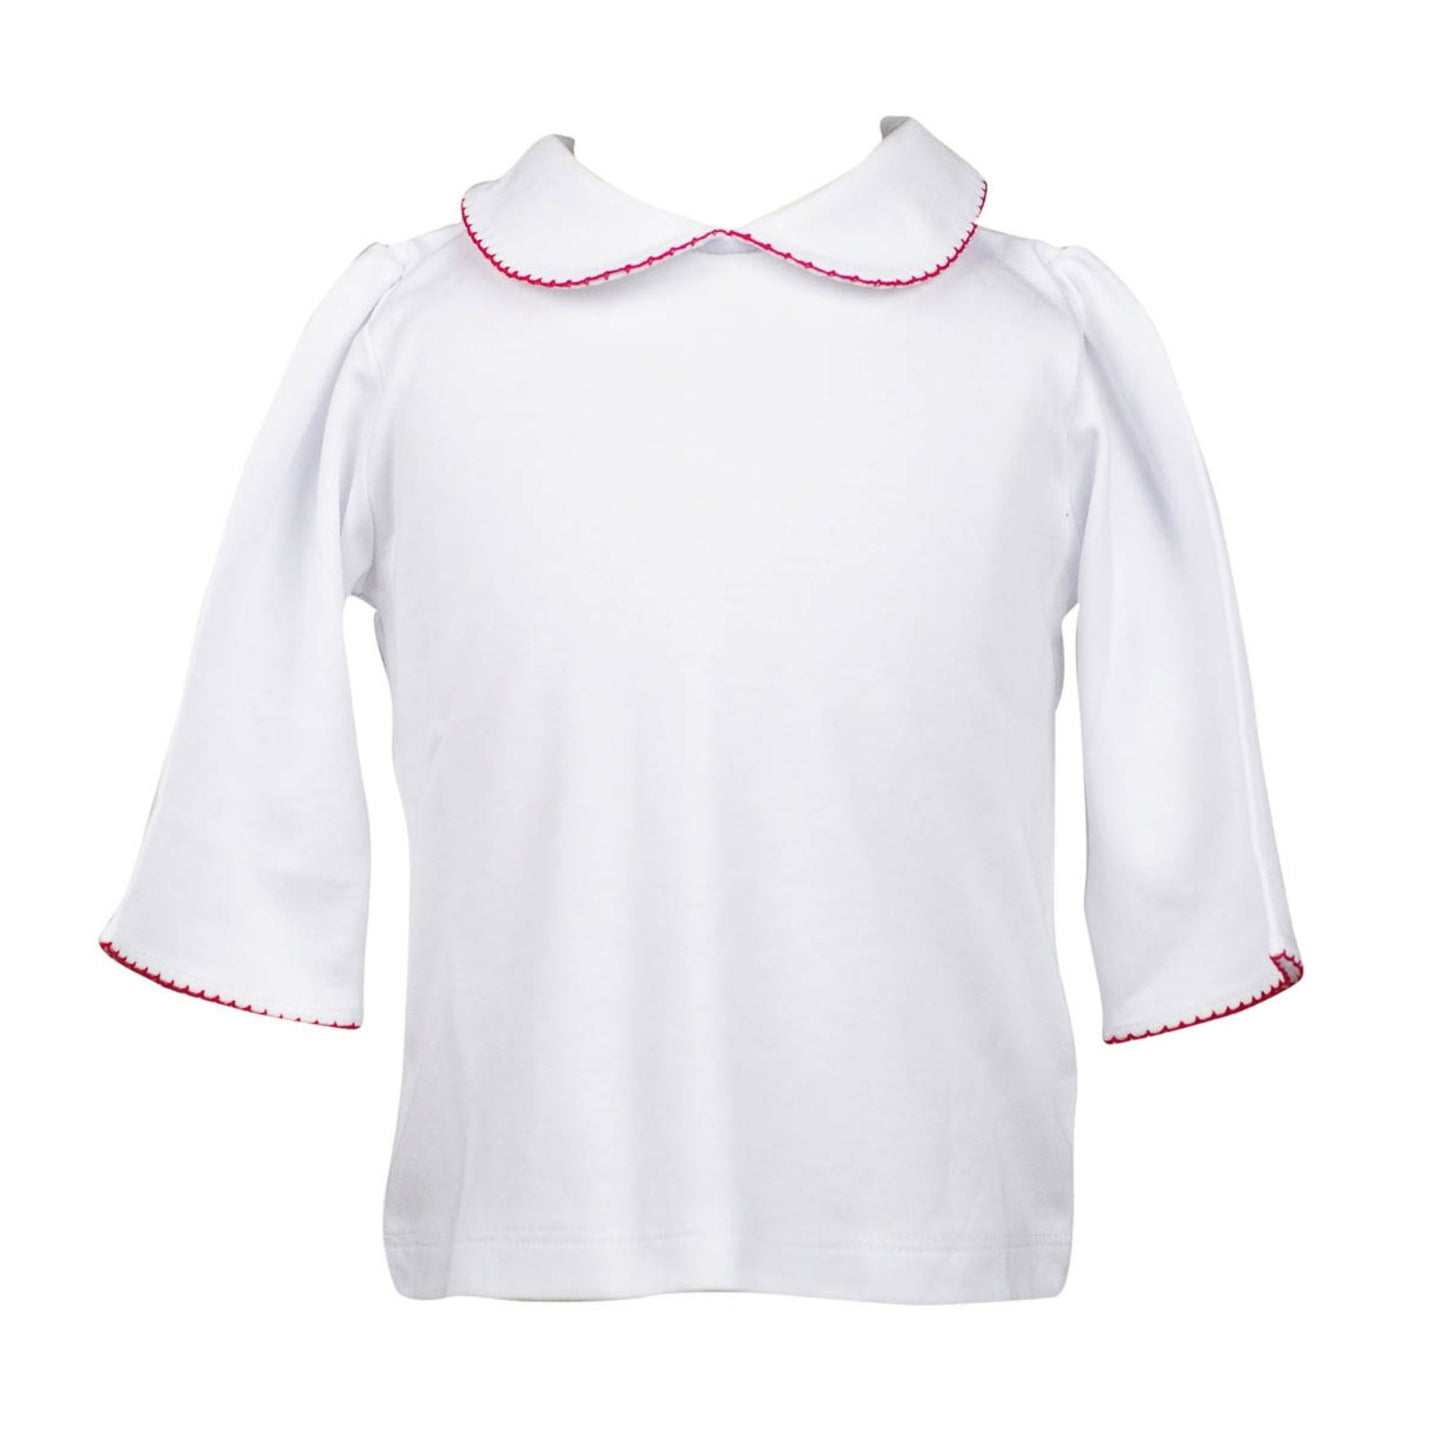 Girls 3/4 Sleeve Shirt with Picot Edge